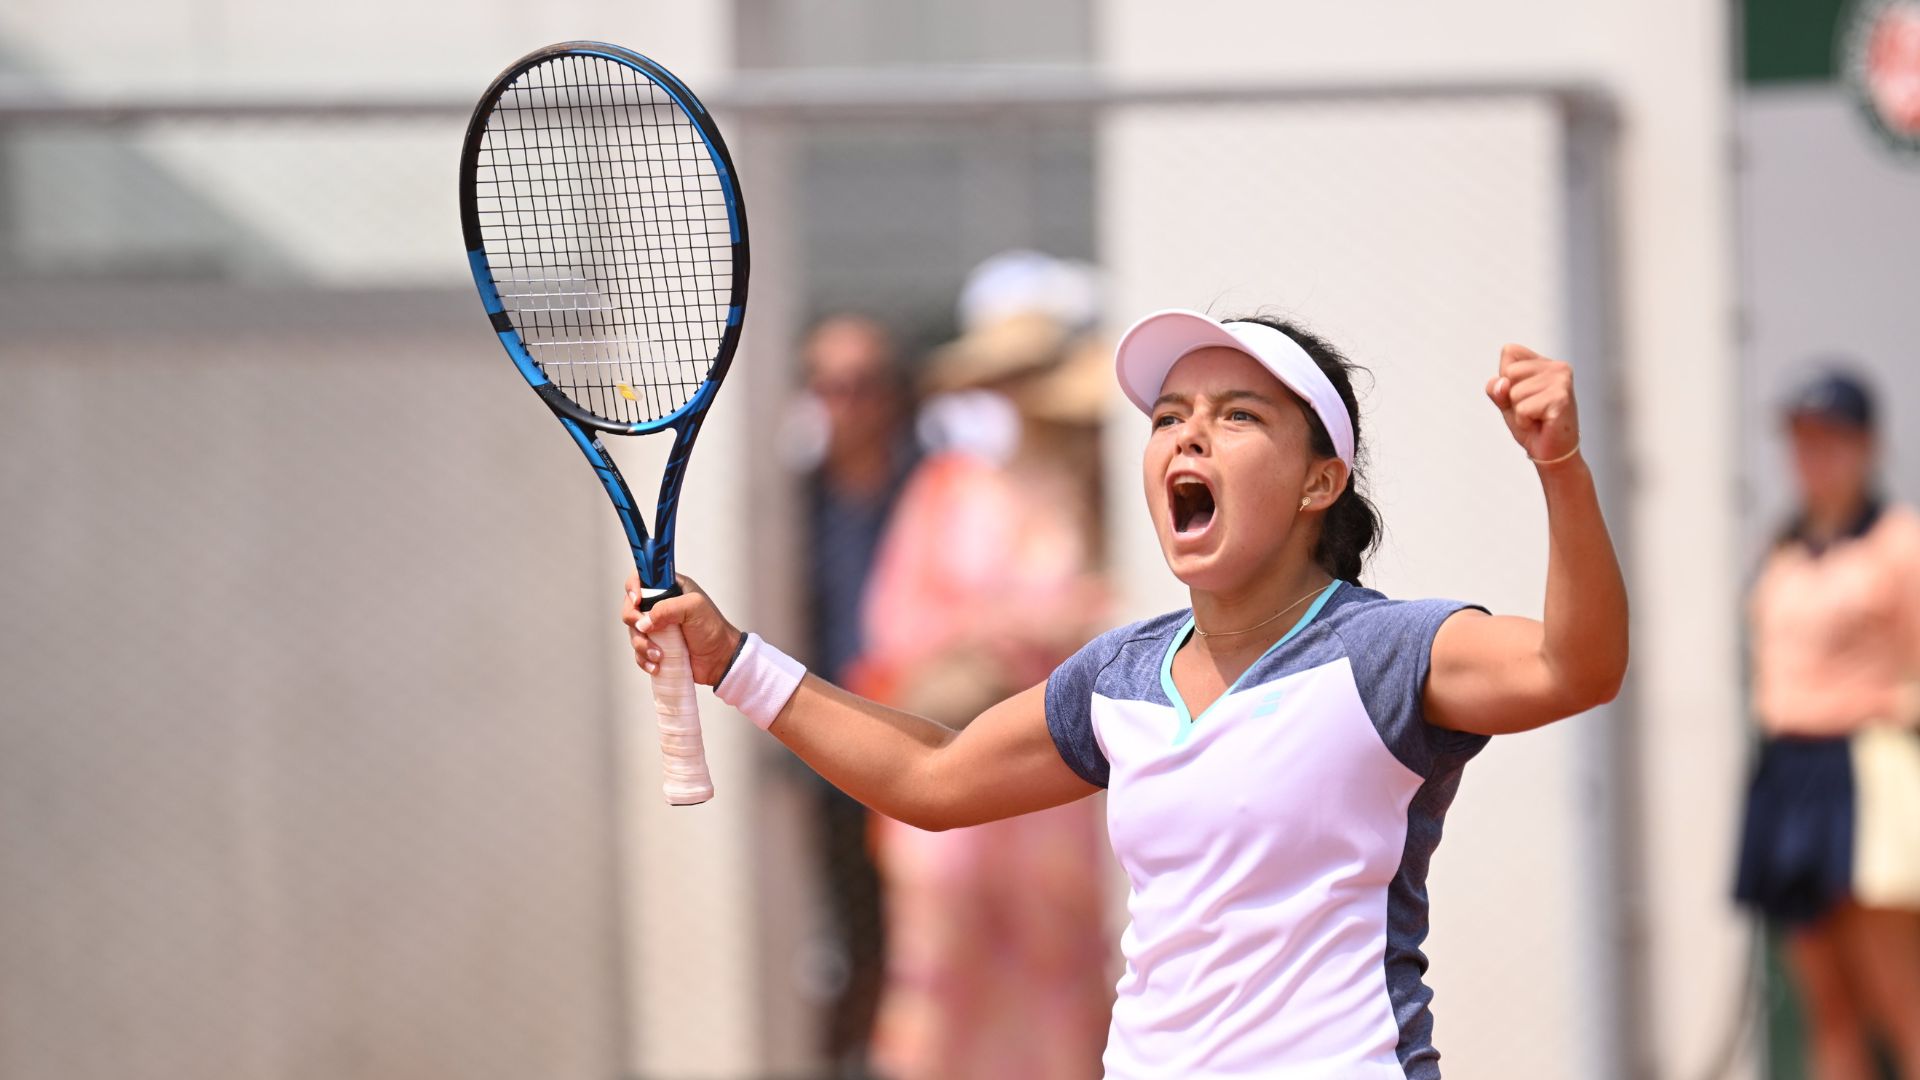 Lucciana Pérez qualified for the final of Roland Garros Junior, a historic achievement for Peruvian tennis.